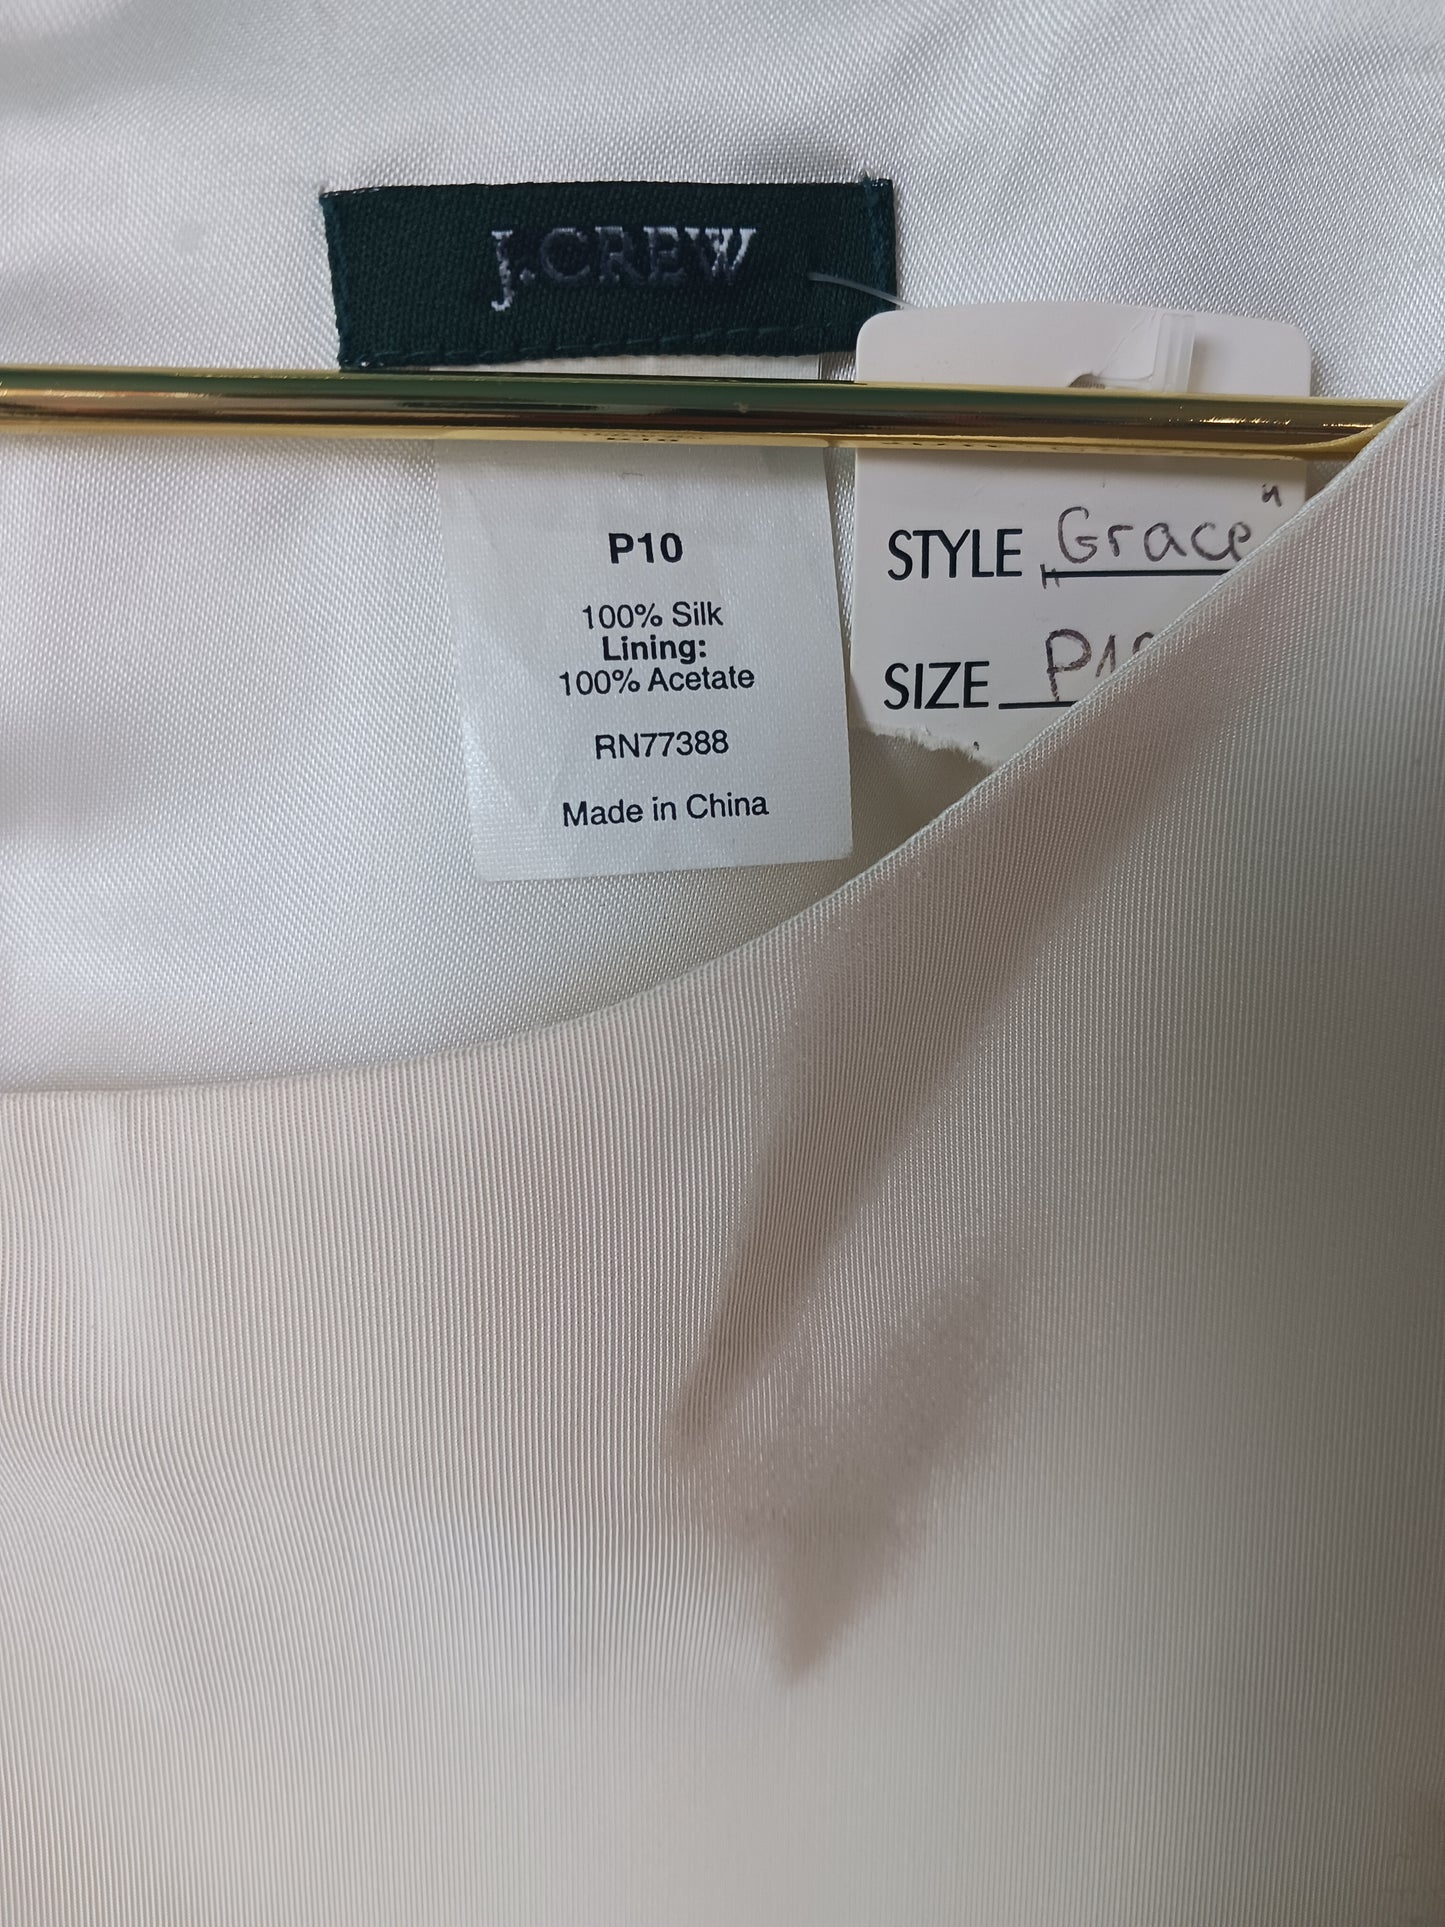 J Crew Ivory Silk Dress, "Grace Kelly" Style, Size 10P